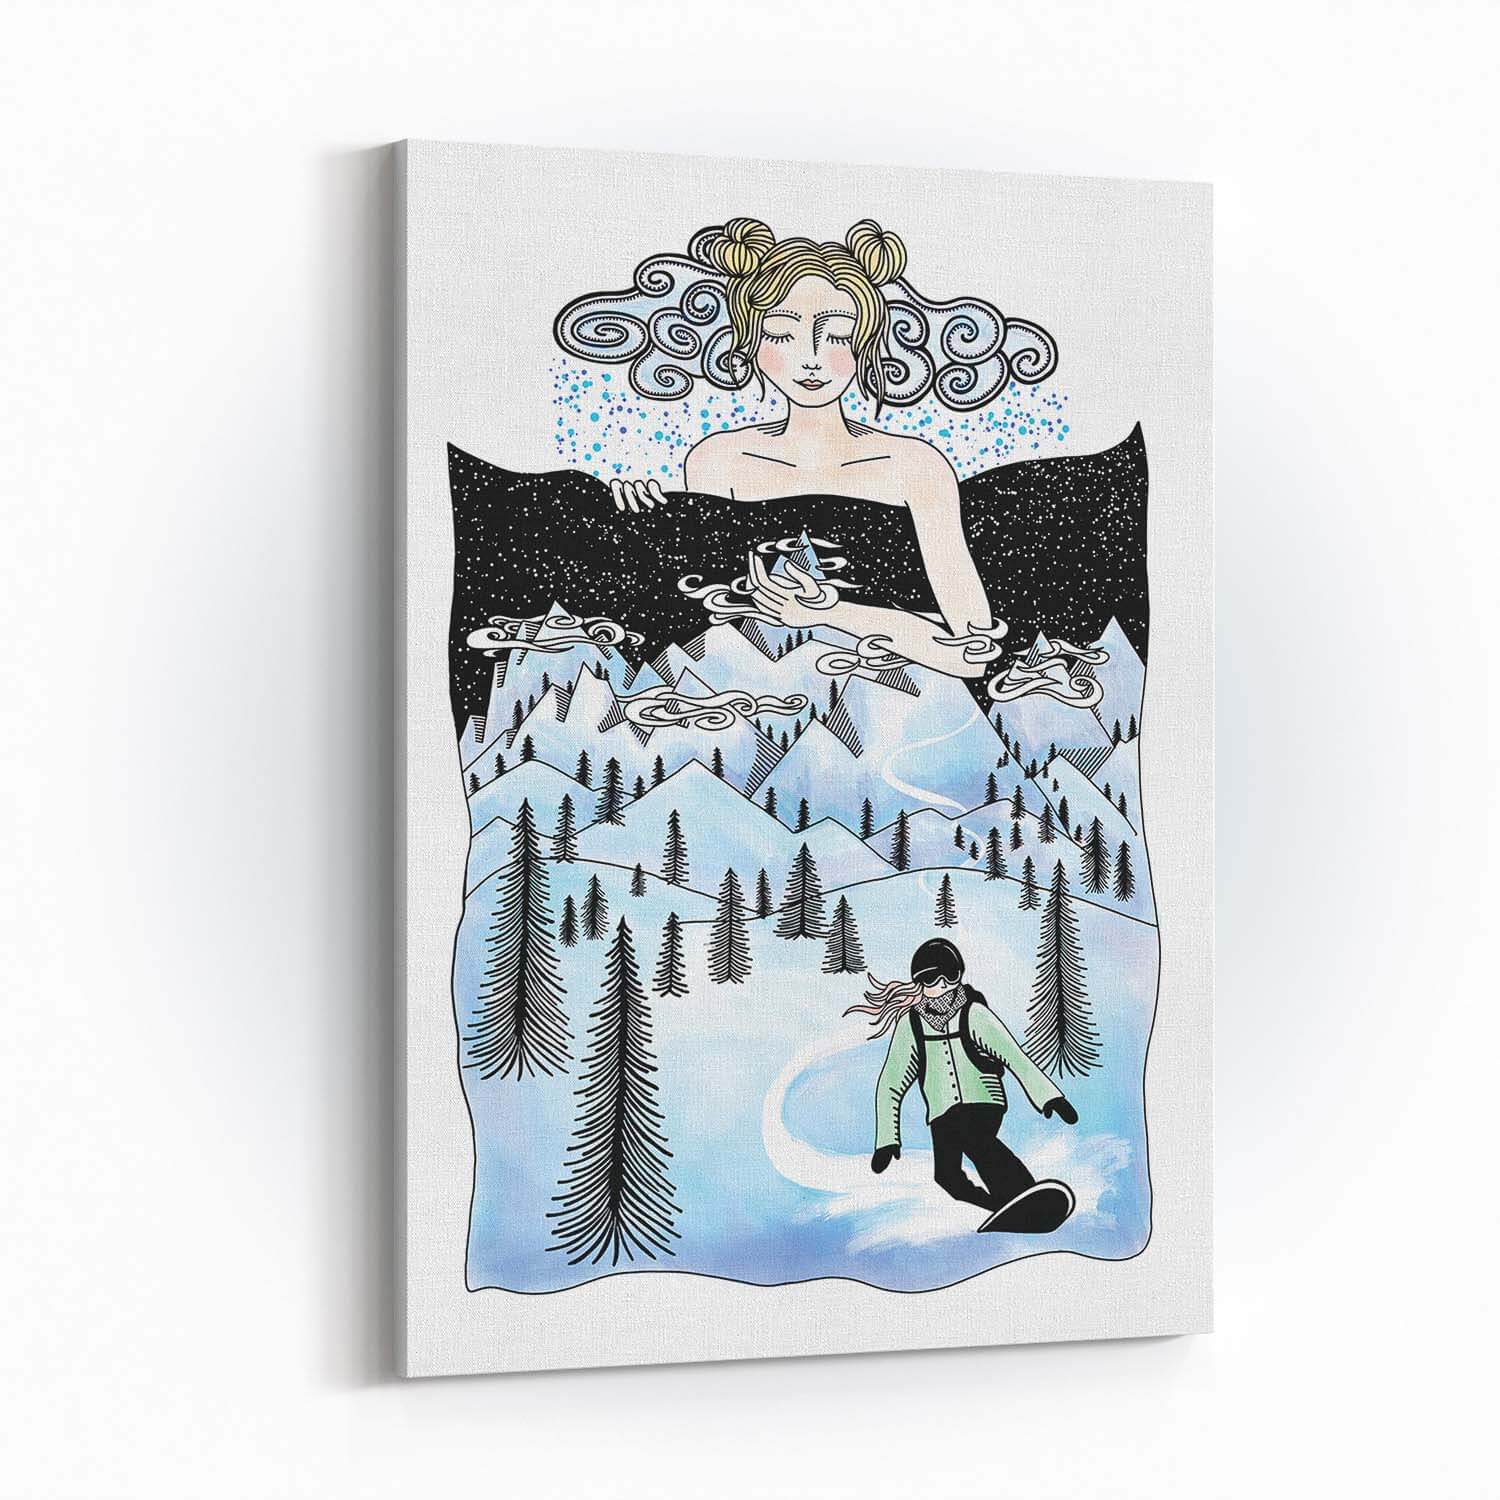 Snowboard Dreams Print - Ketsol